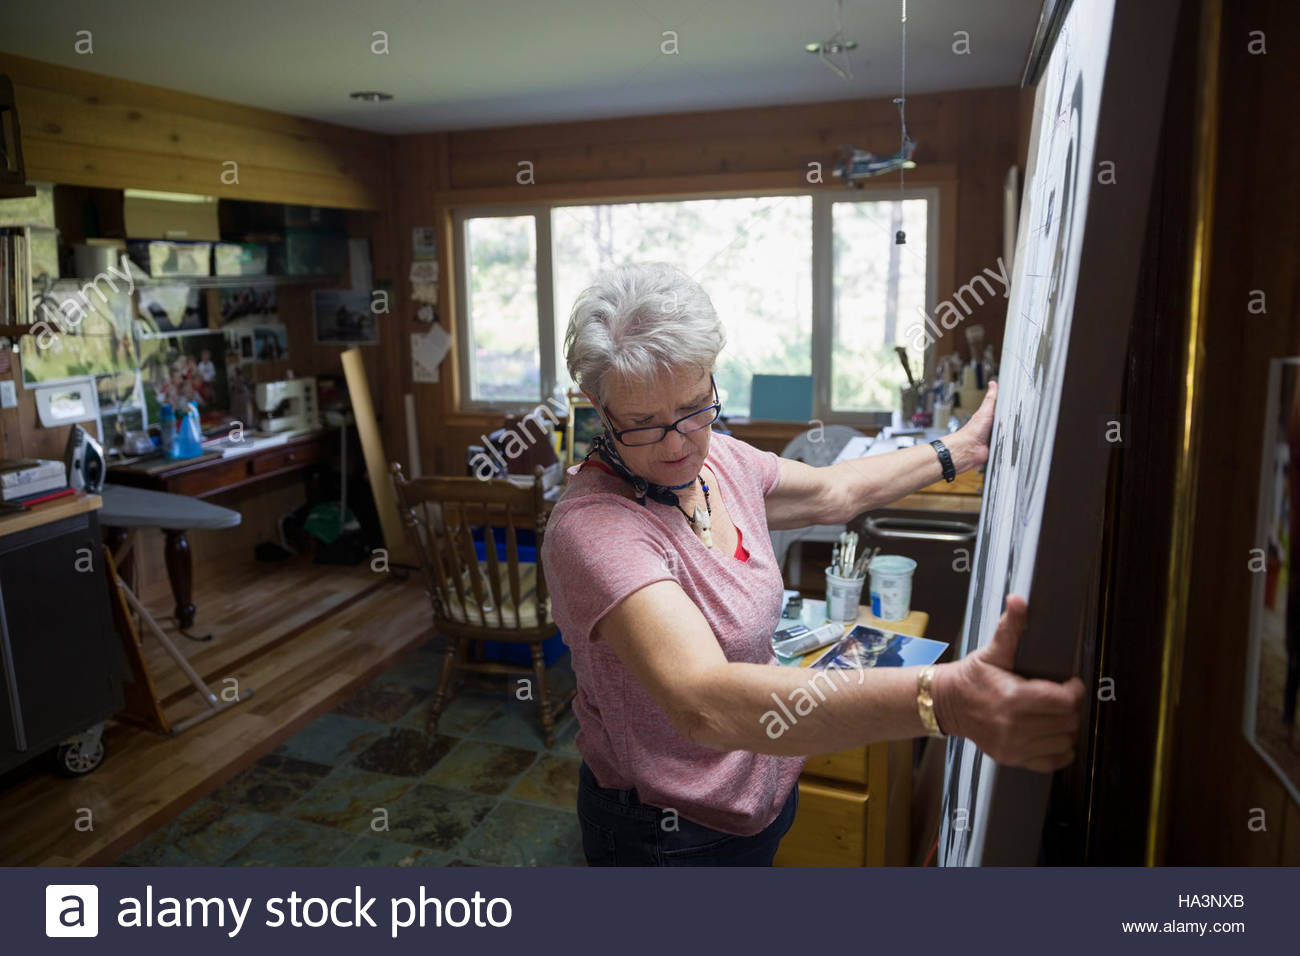 Senior woman artist lifting painting in art studio Stock Photo